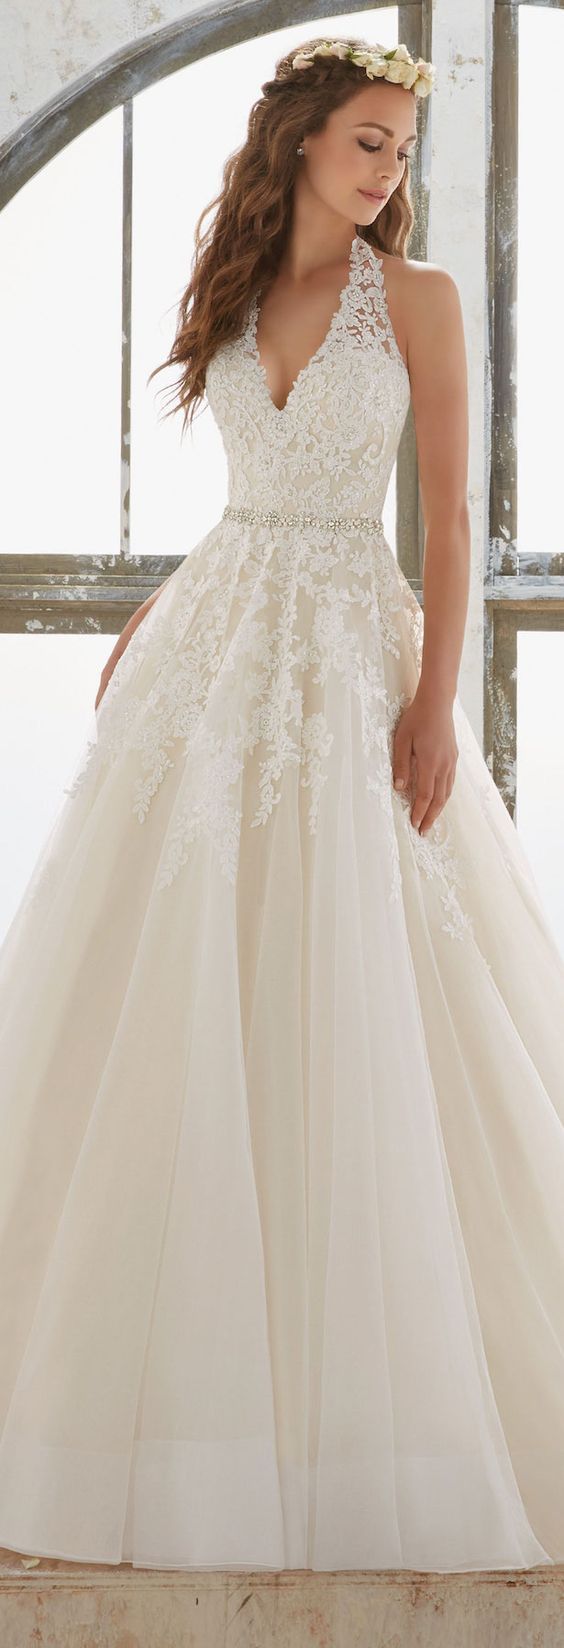 Mariage - Wedding Dress Inspiration - Mori Lee